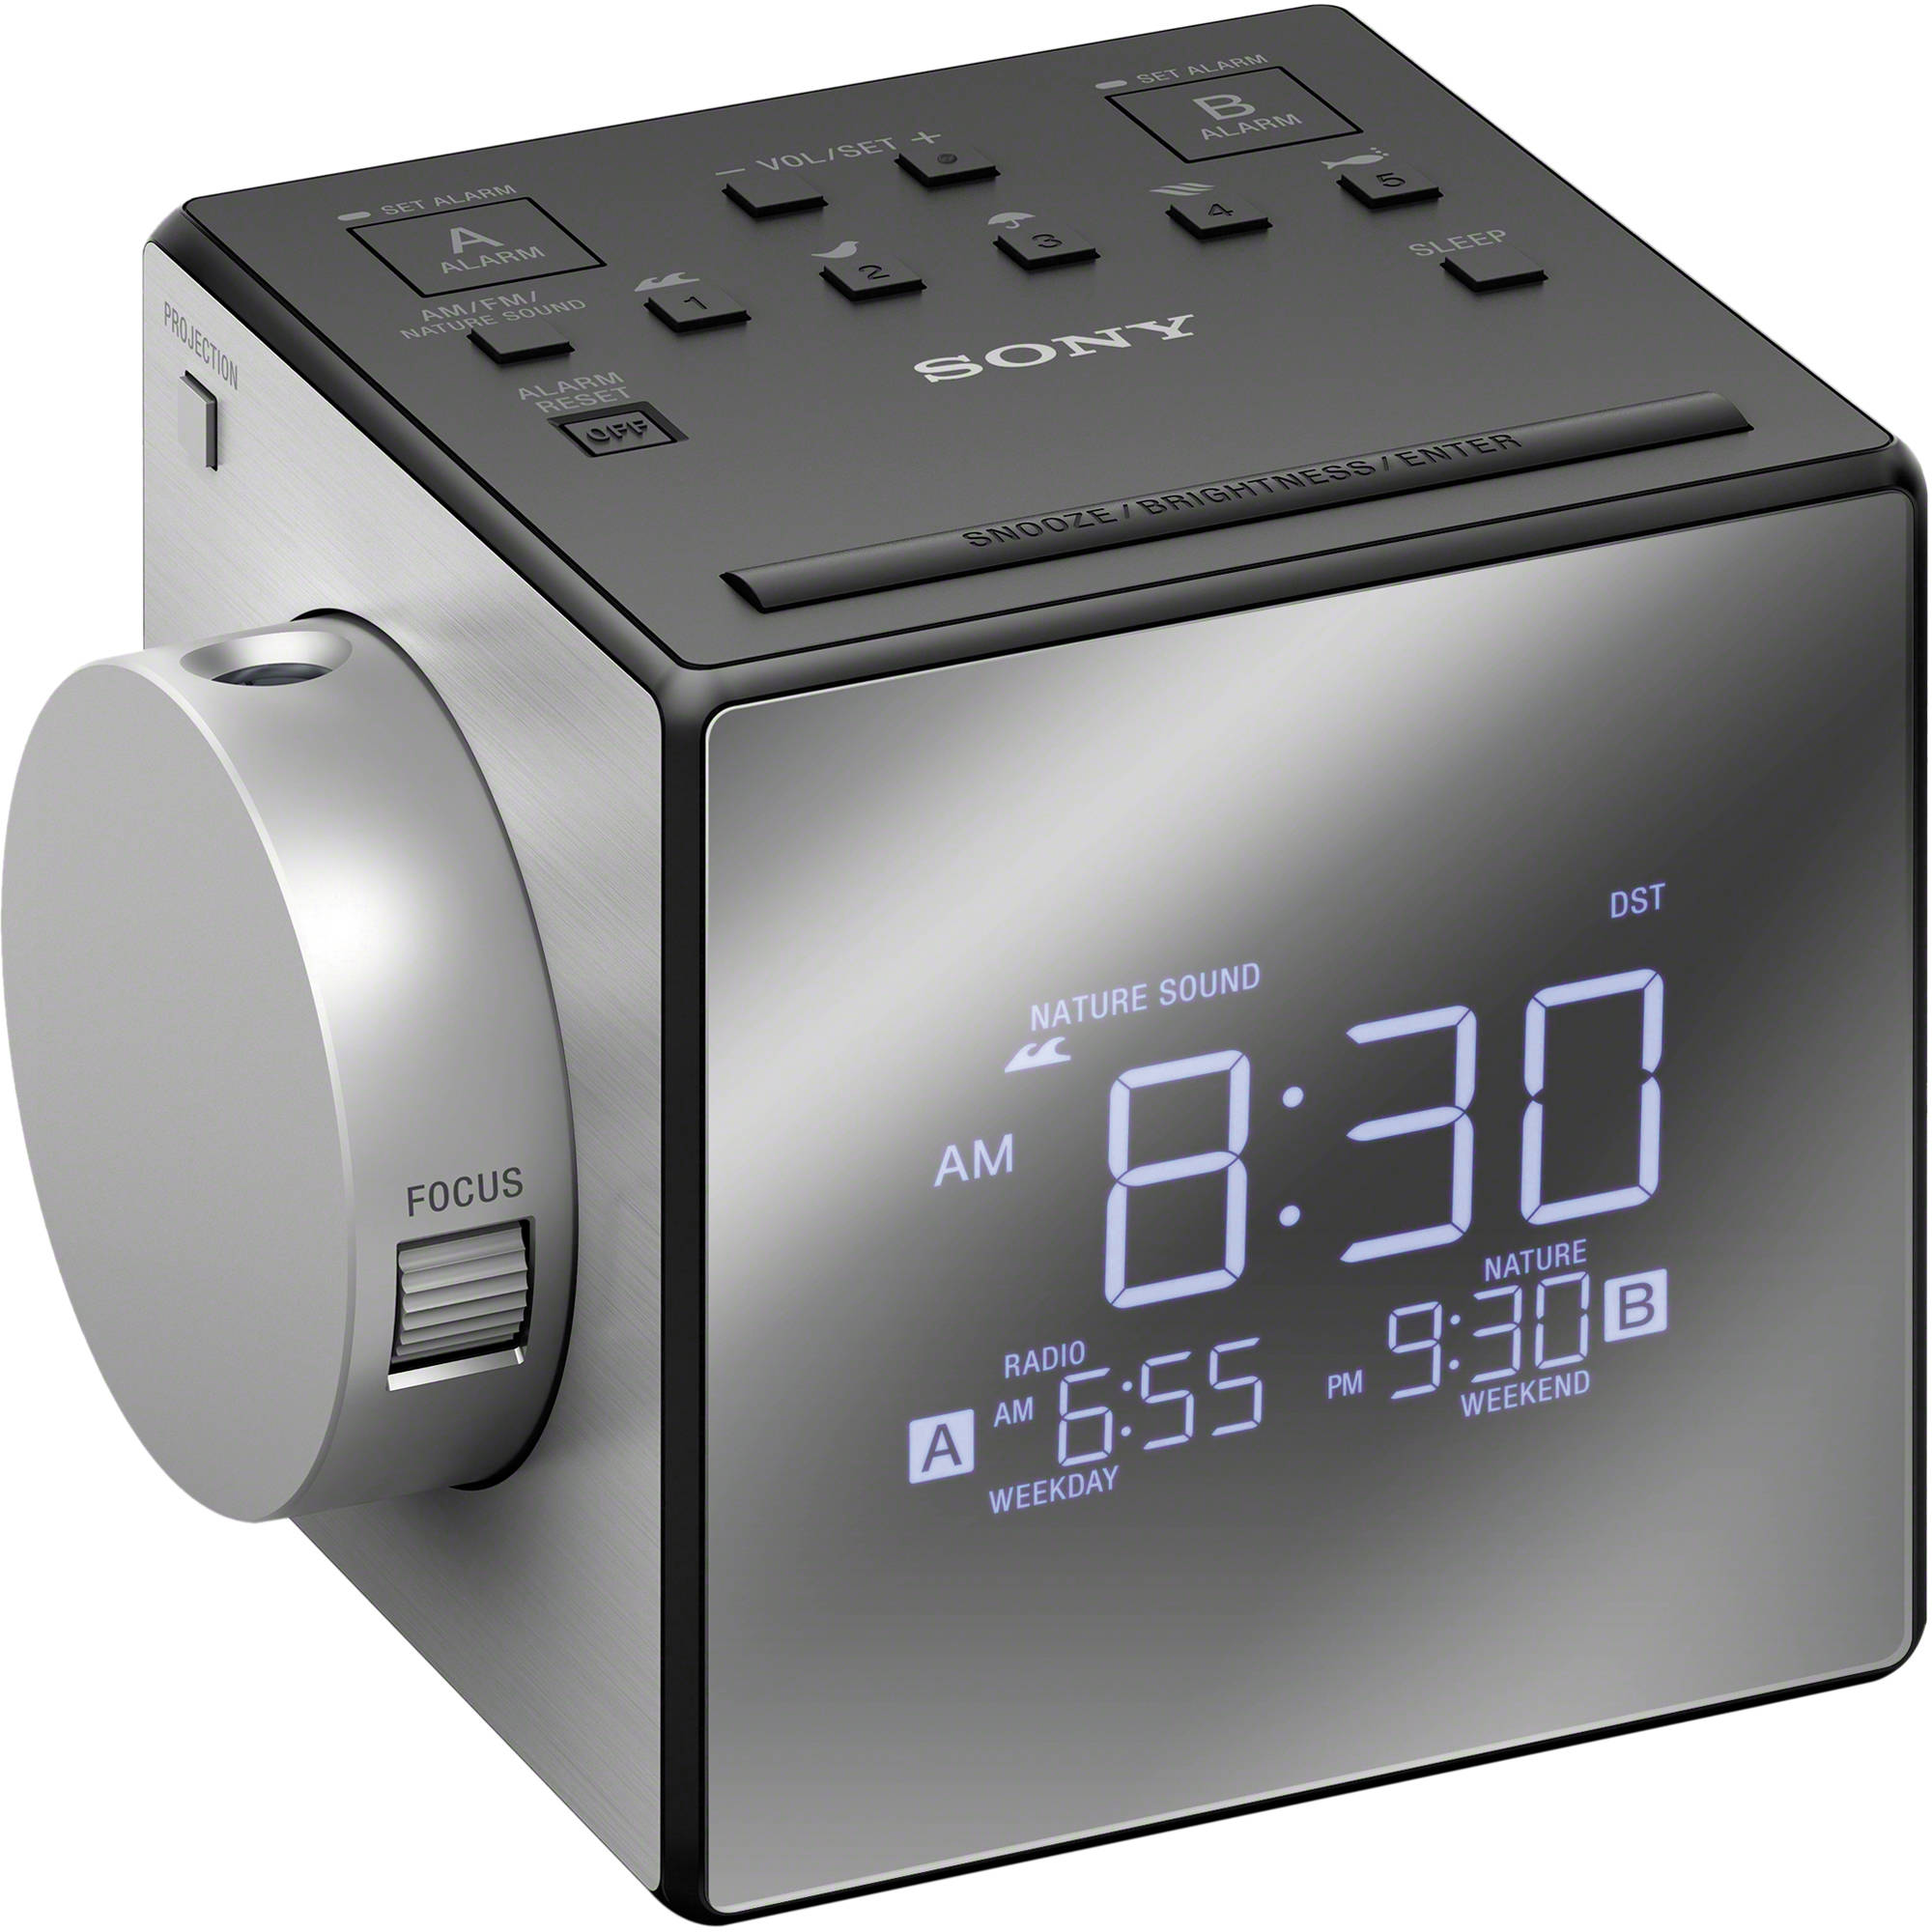 Sony Icf C1pj Alarm Clock Radio With Time Projection Black